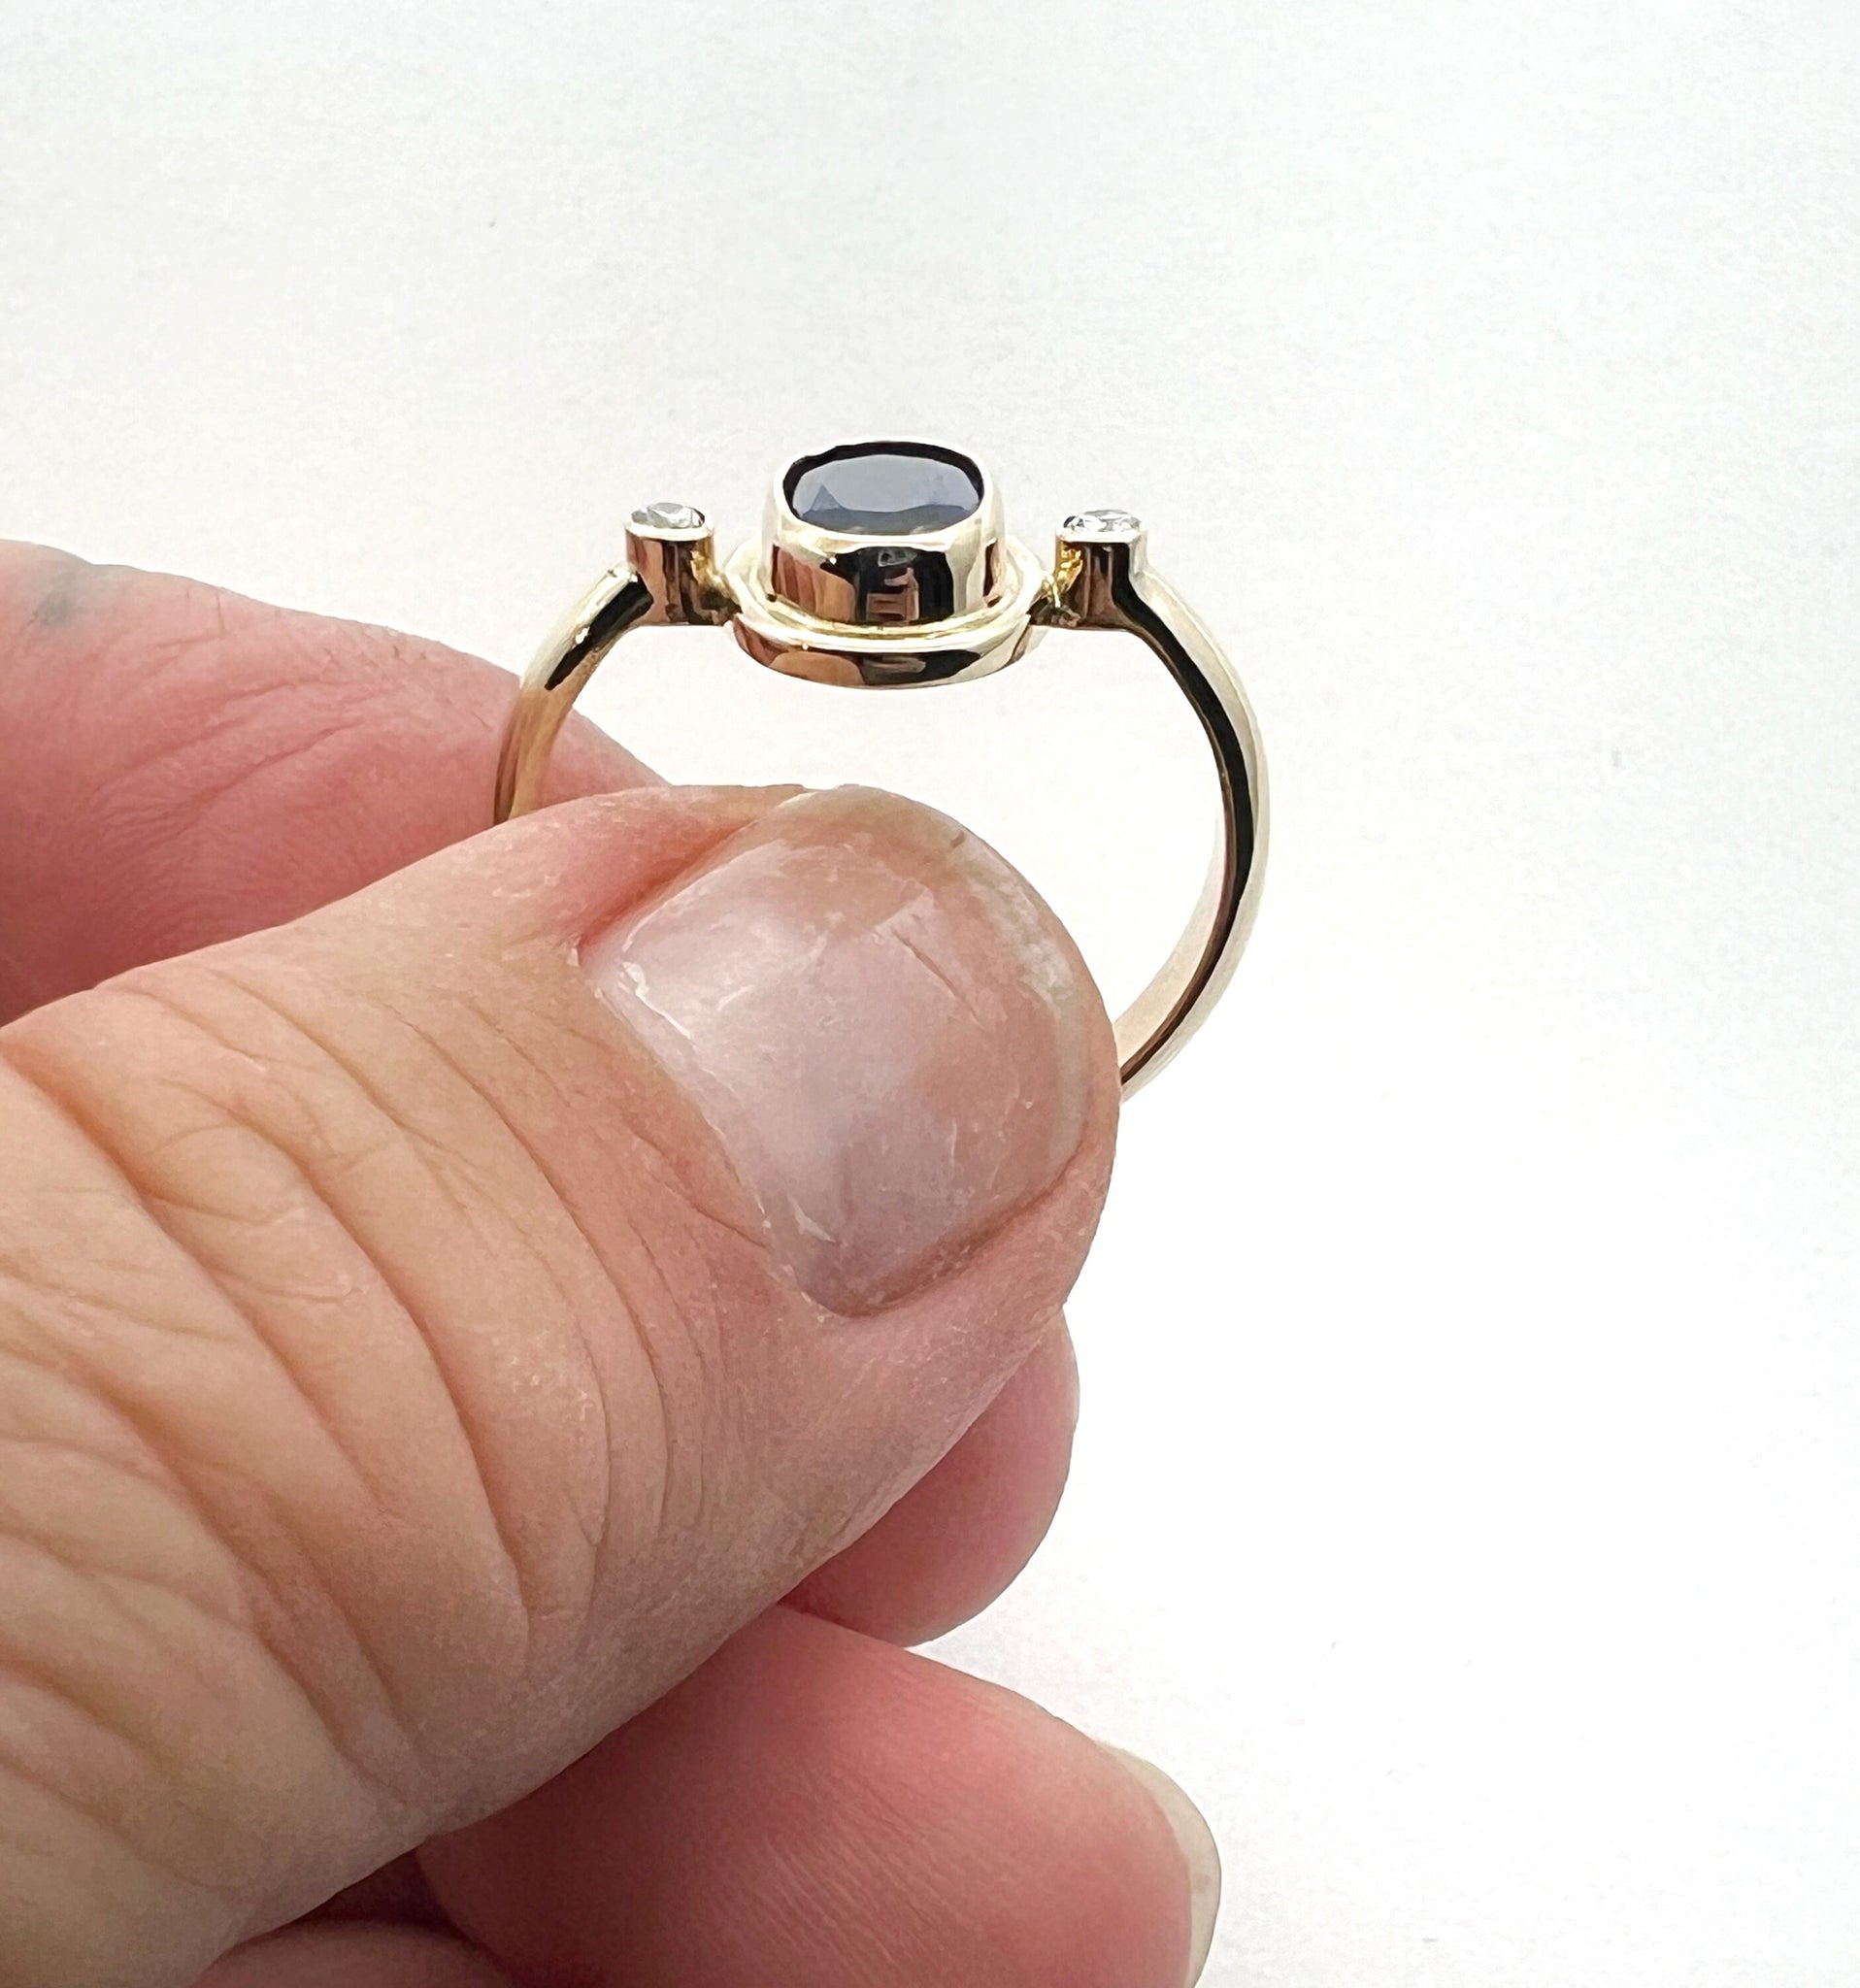 Sapphire and Diamond Ring In 14k Gold, September Birthstone Ring, Alternate Engagement ring, Friendship Ring